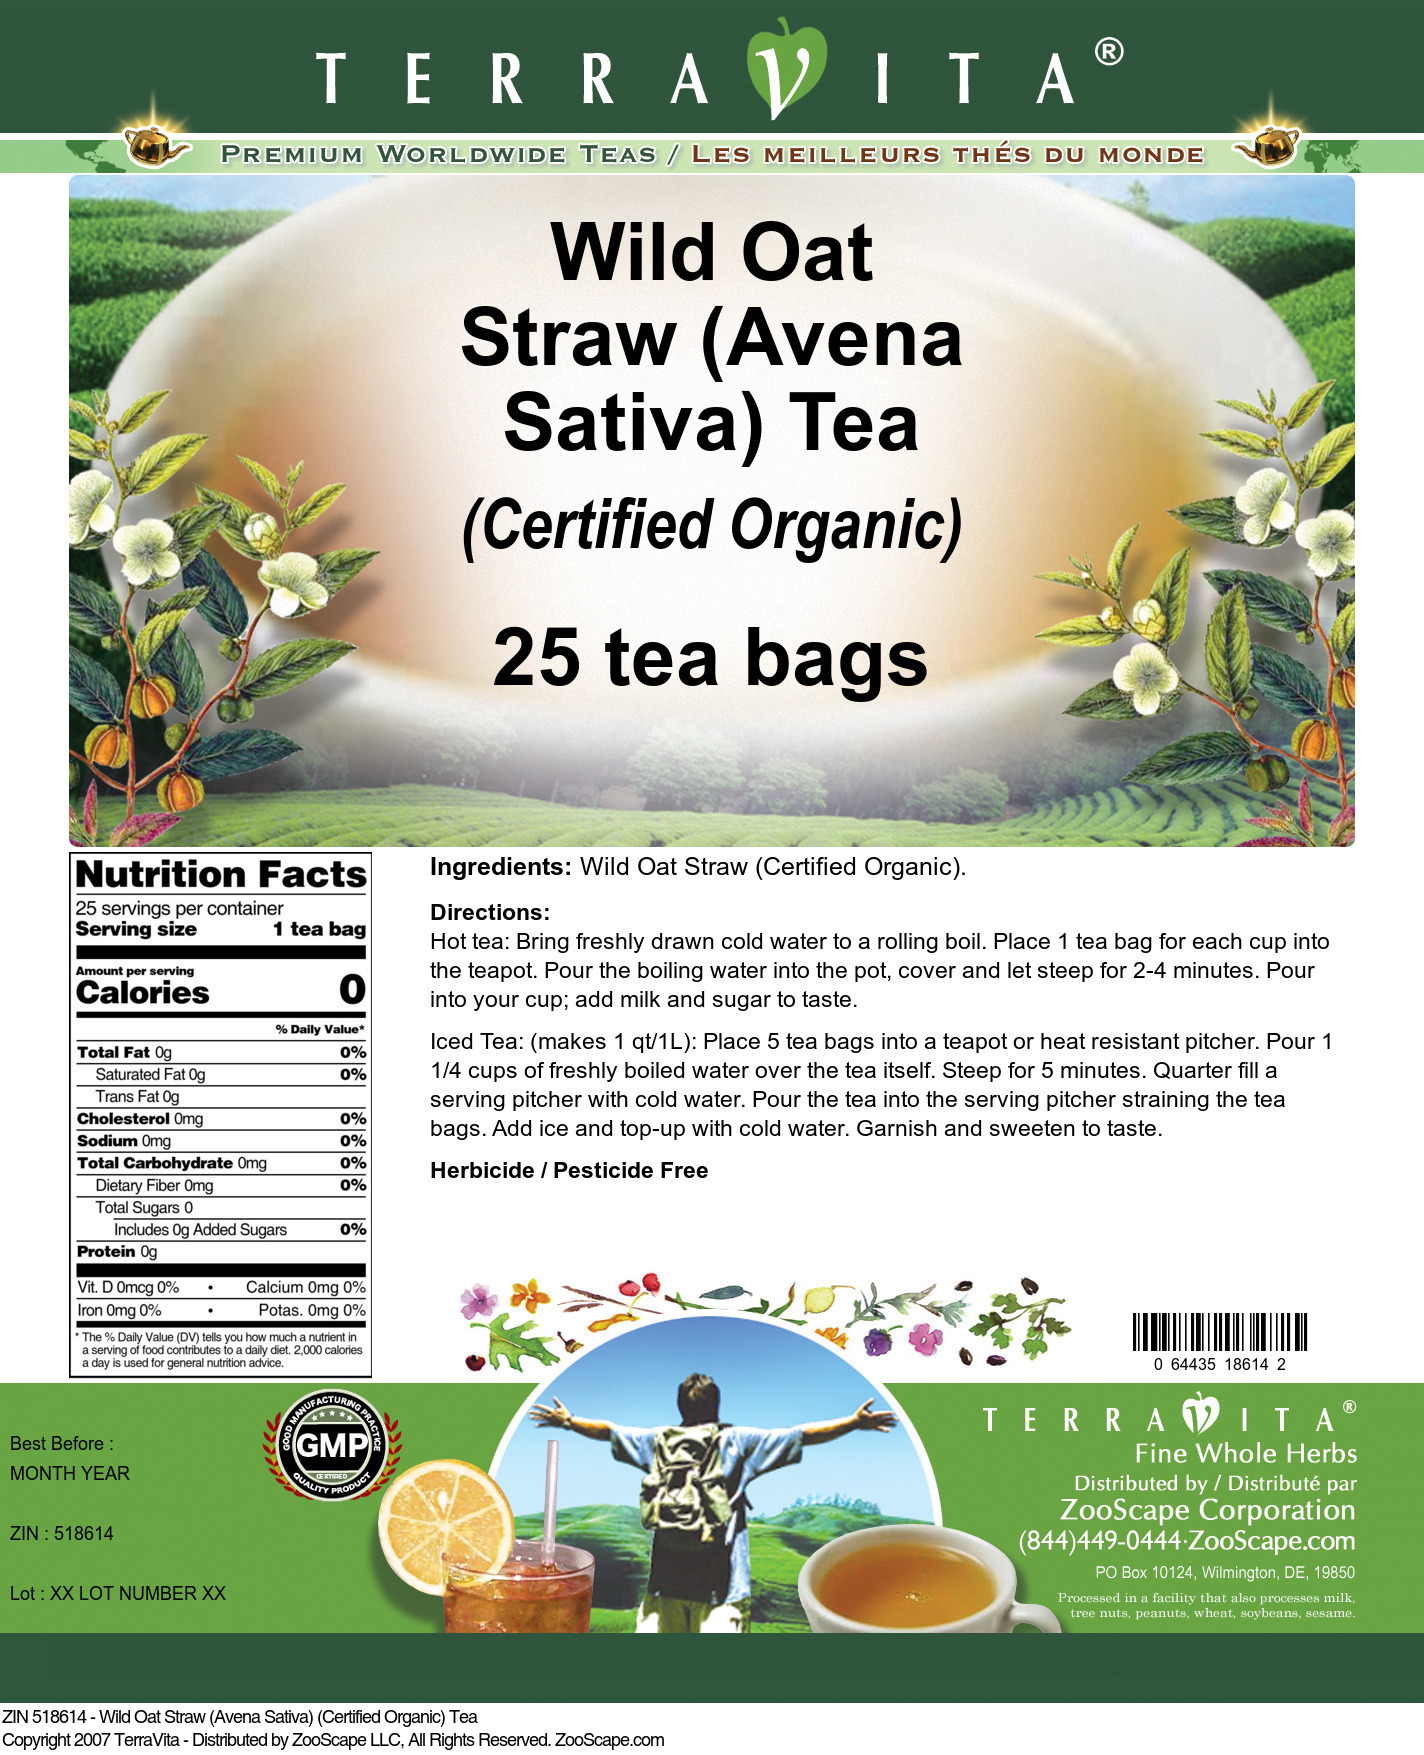 Wild Oat Straw (Avena Sativa) (Certified Organic) Tea - Label